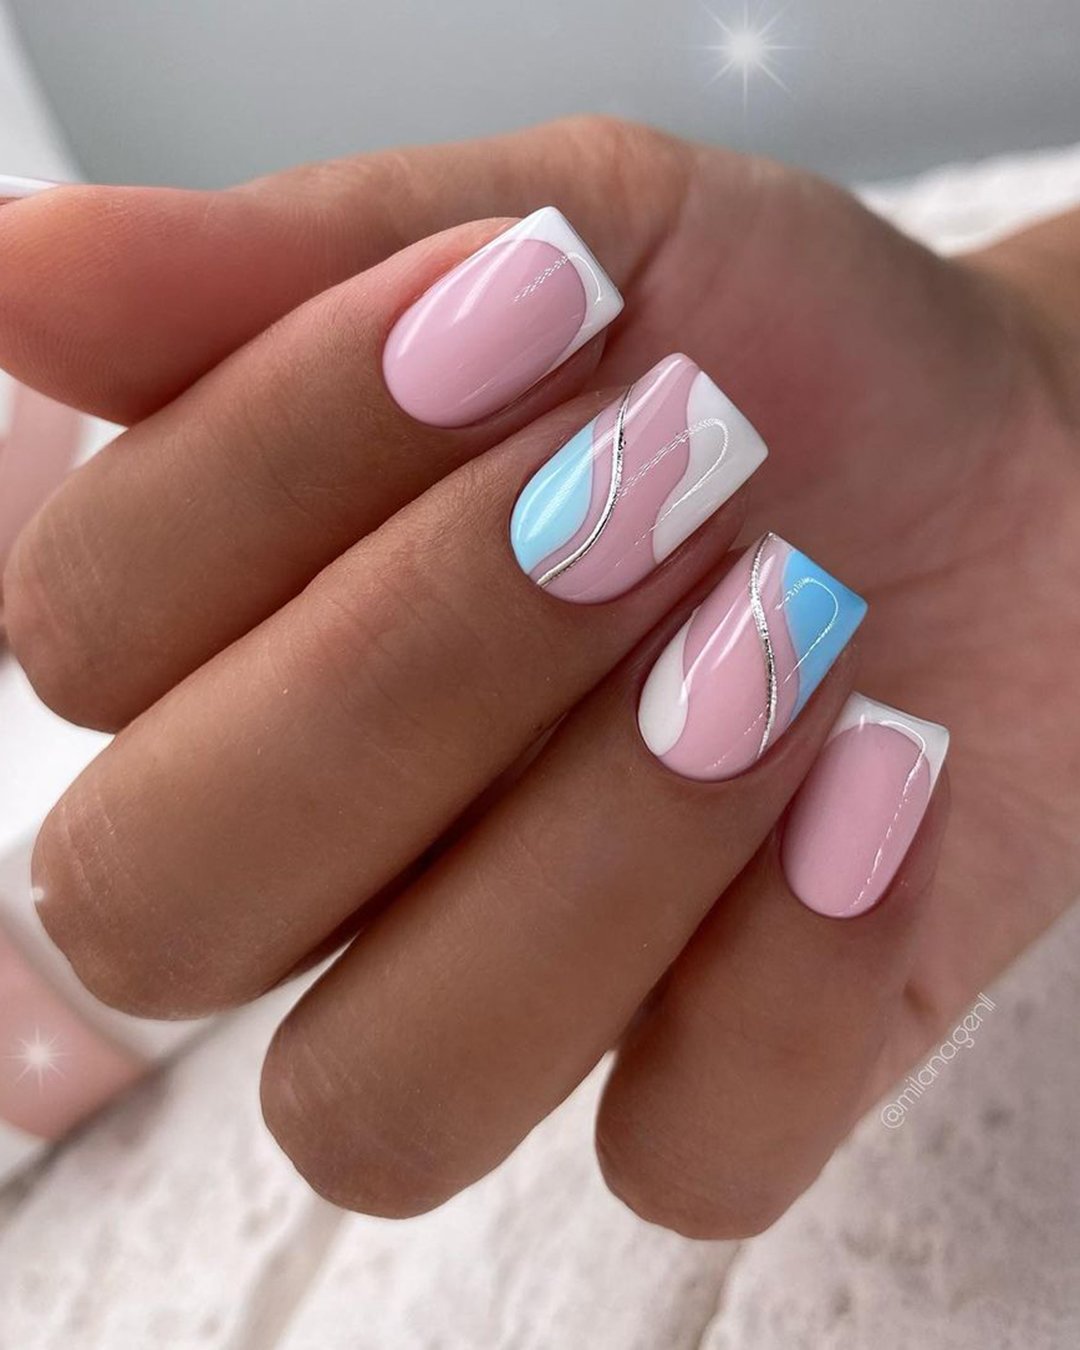 nail design for wedding pink white blue design milana.gen11